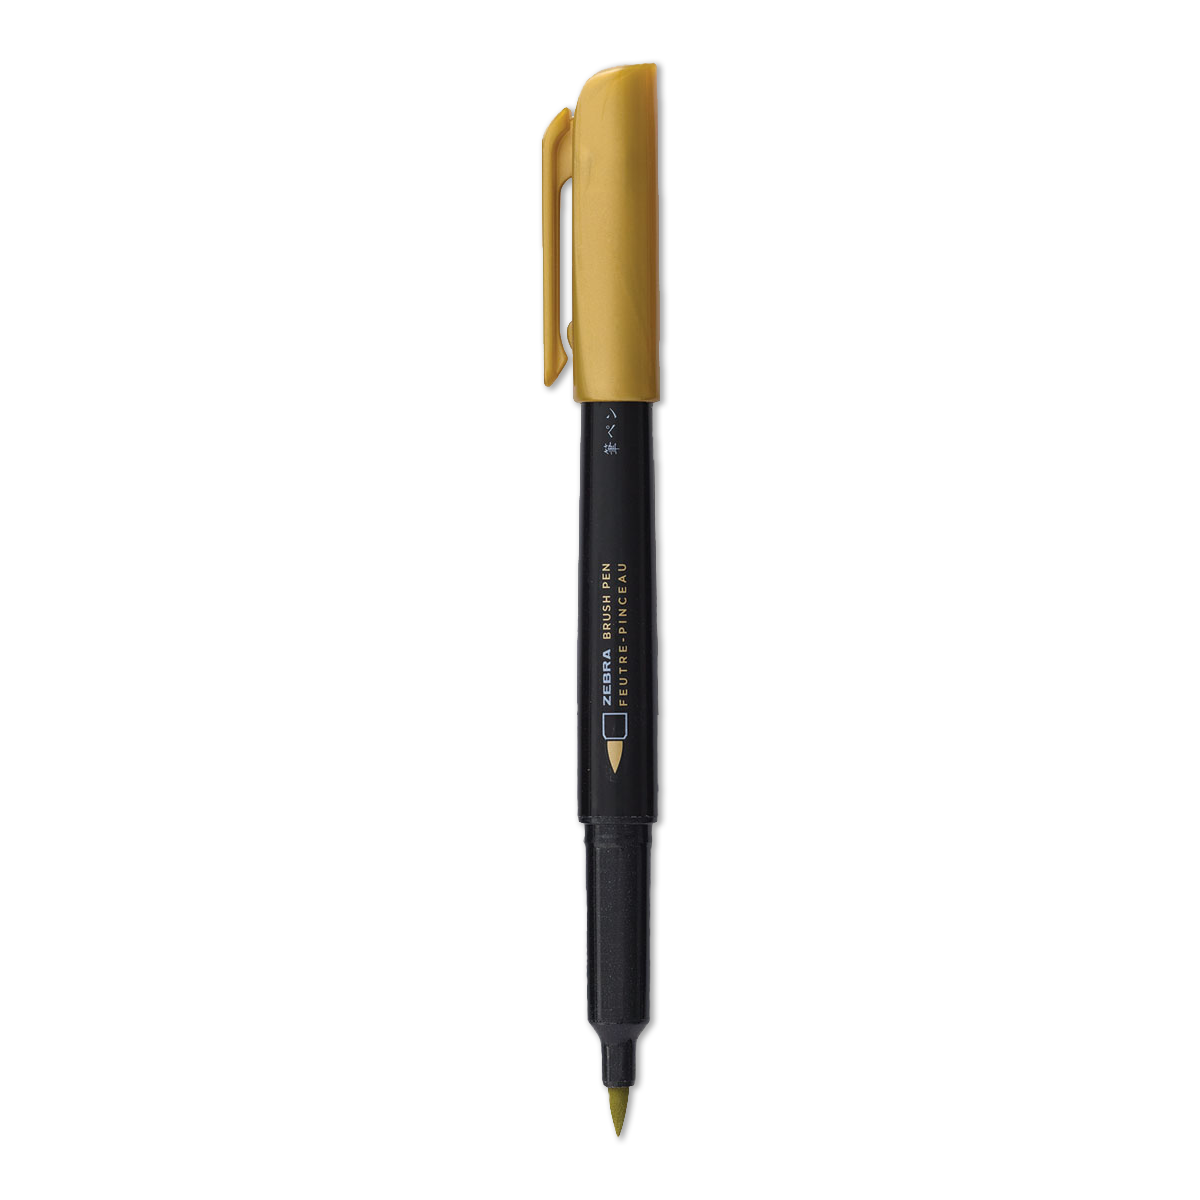 ZEBRA Brand Metallic Brush Pen